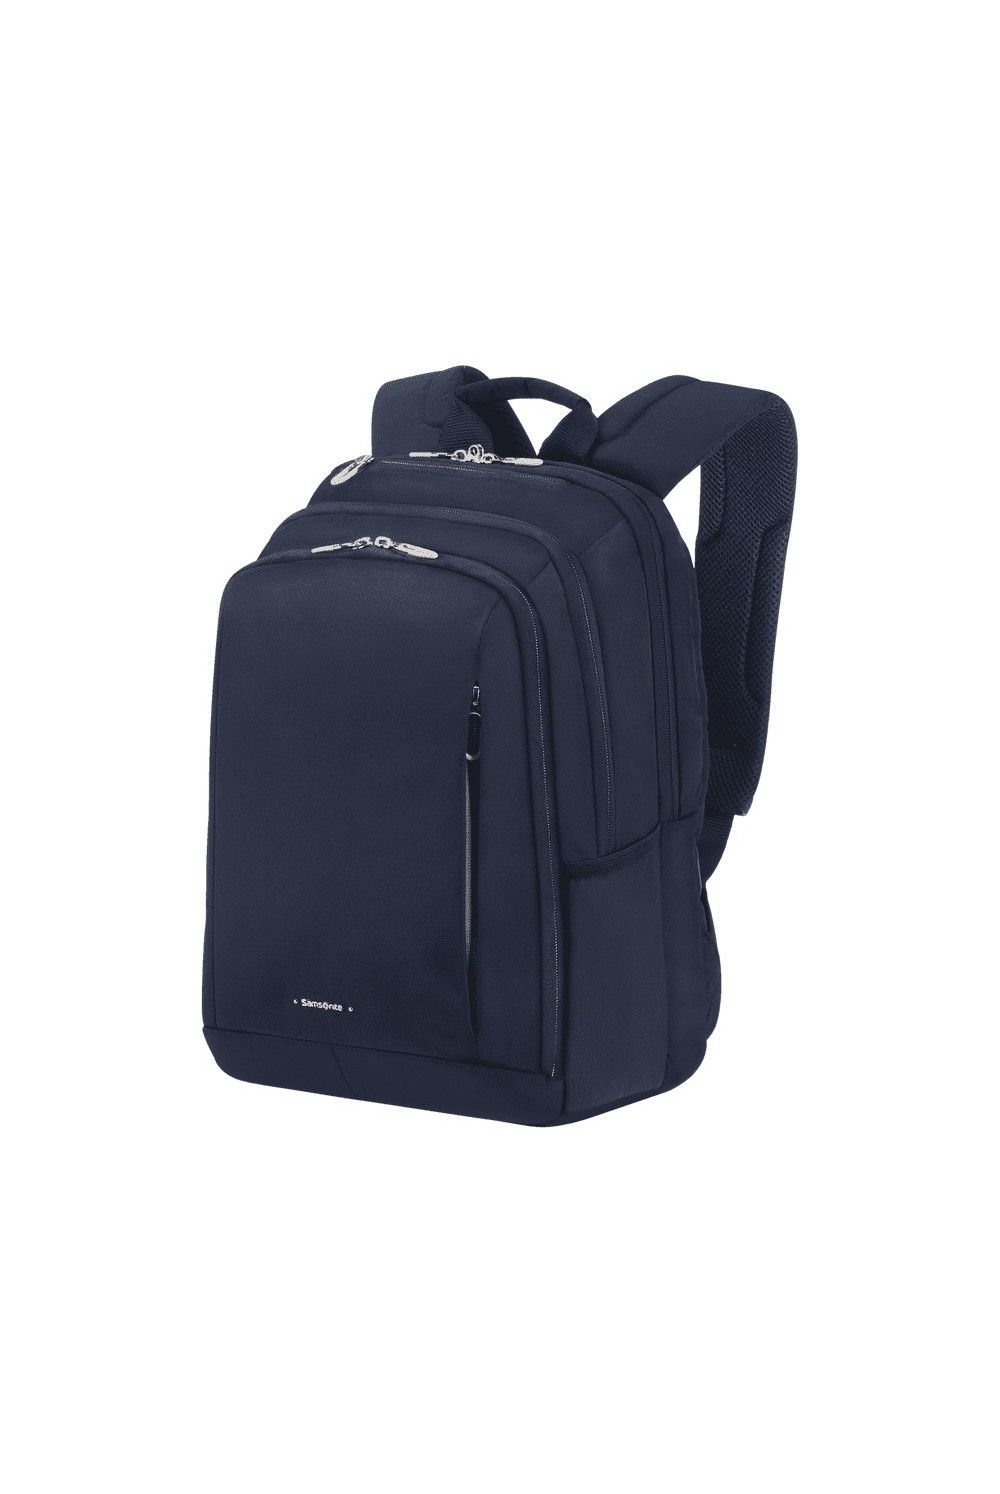 Samsonite Guardit Classy Laptop Backpack 14.1 inches